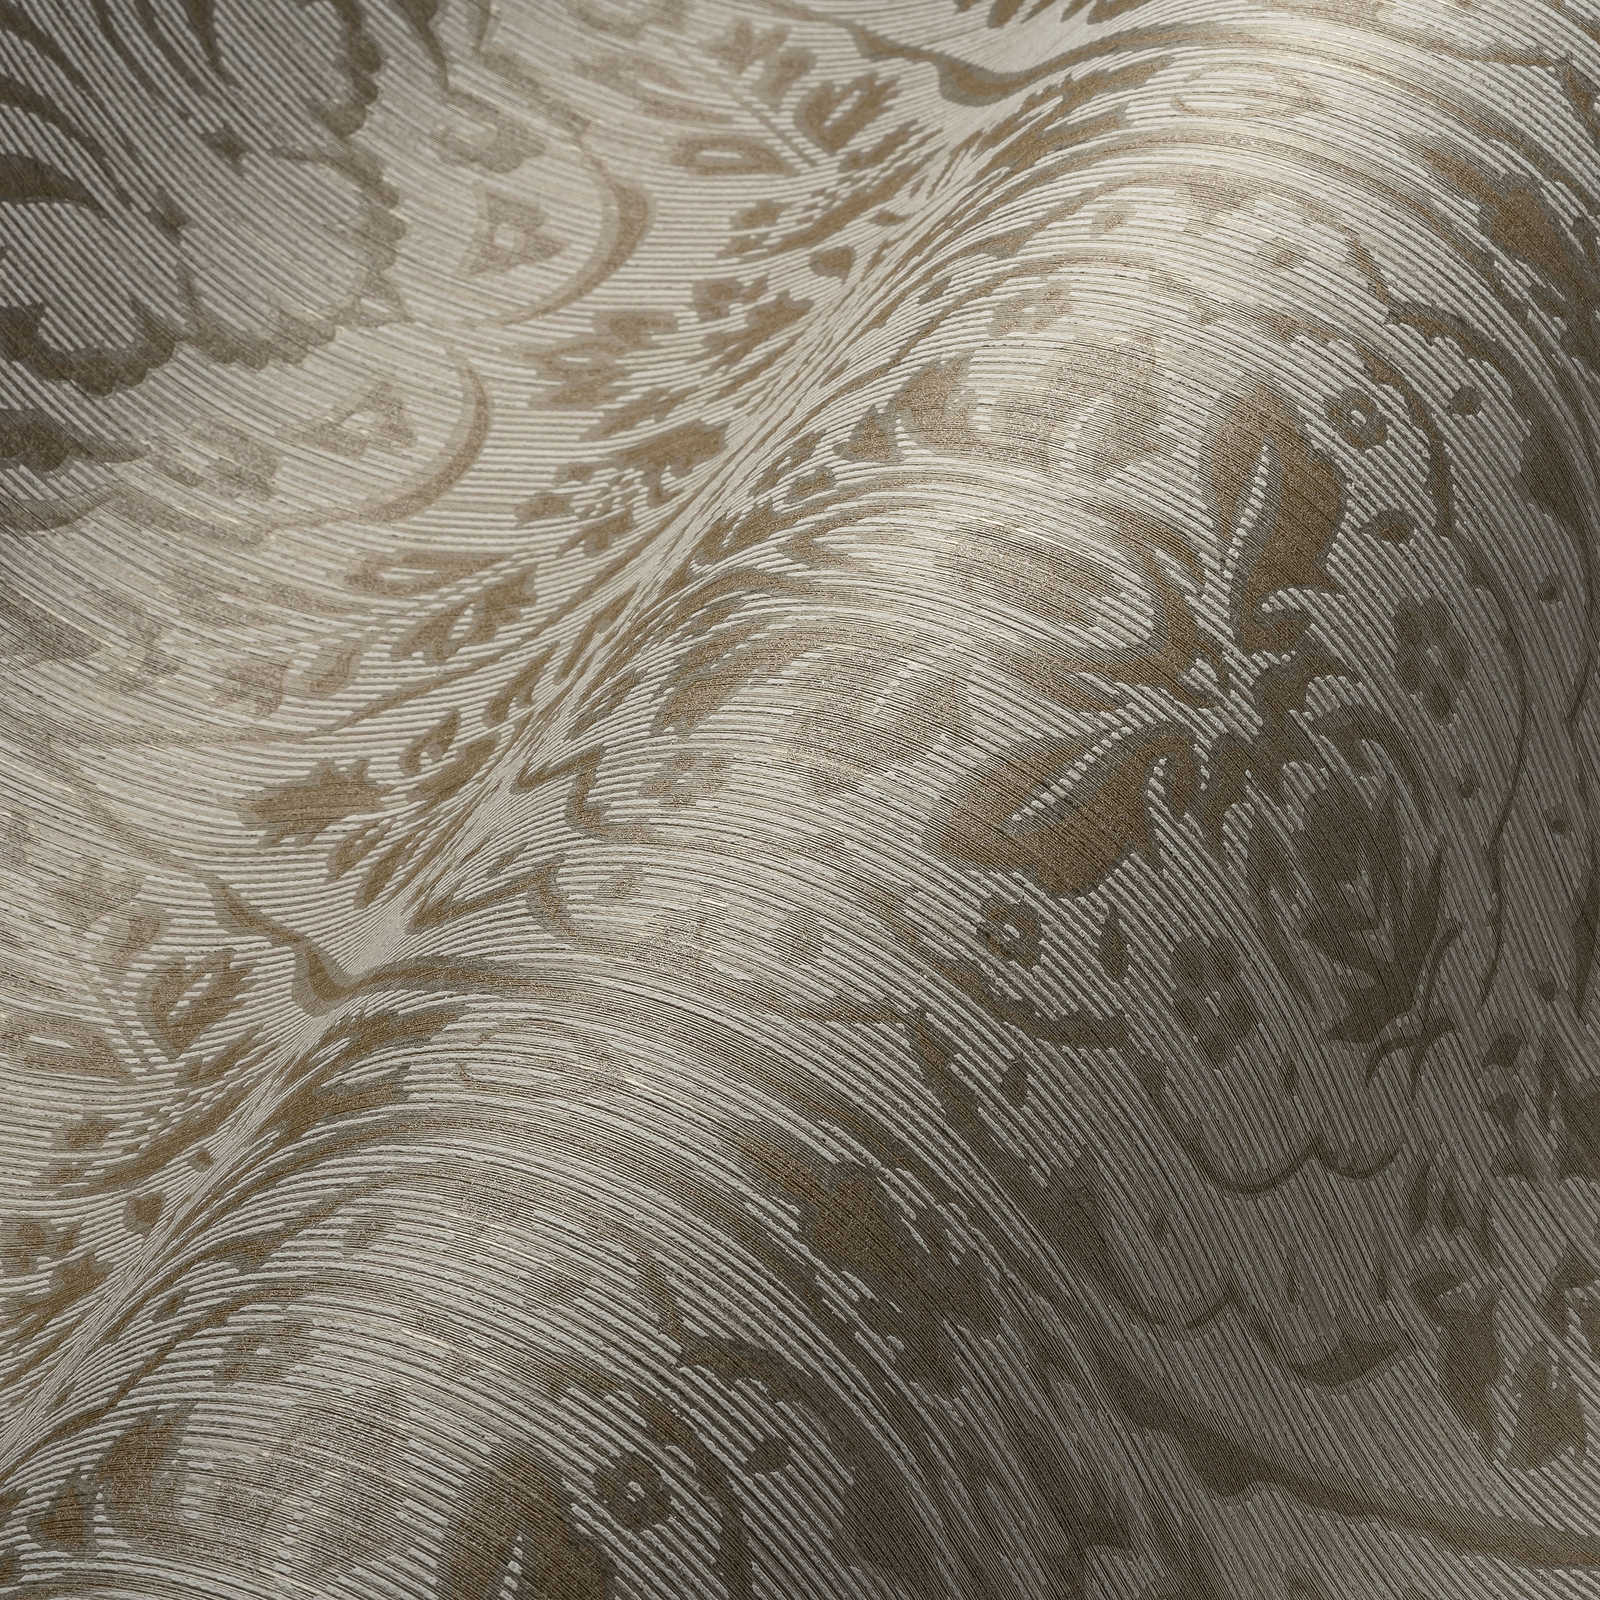             Tapete florales Muster mit Kolonial Stil Ornamenten – Beige, Braun
        